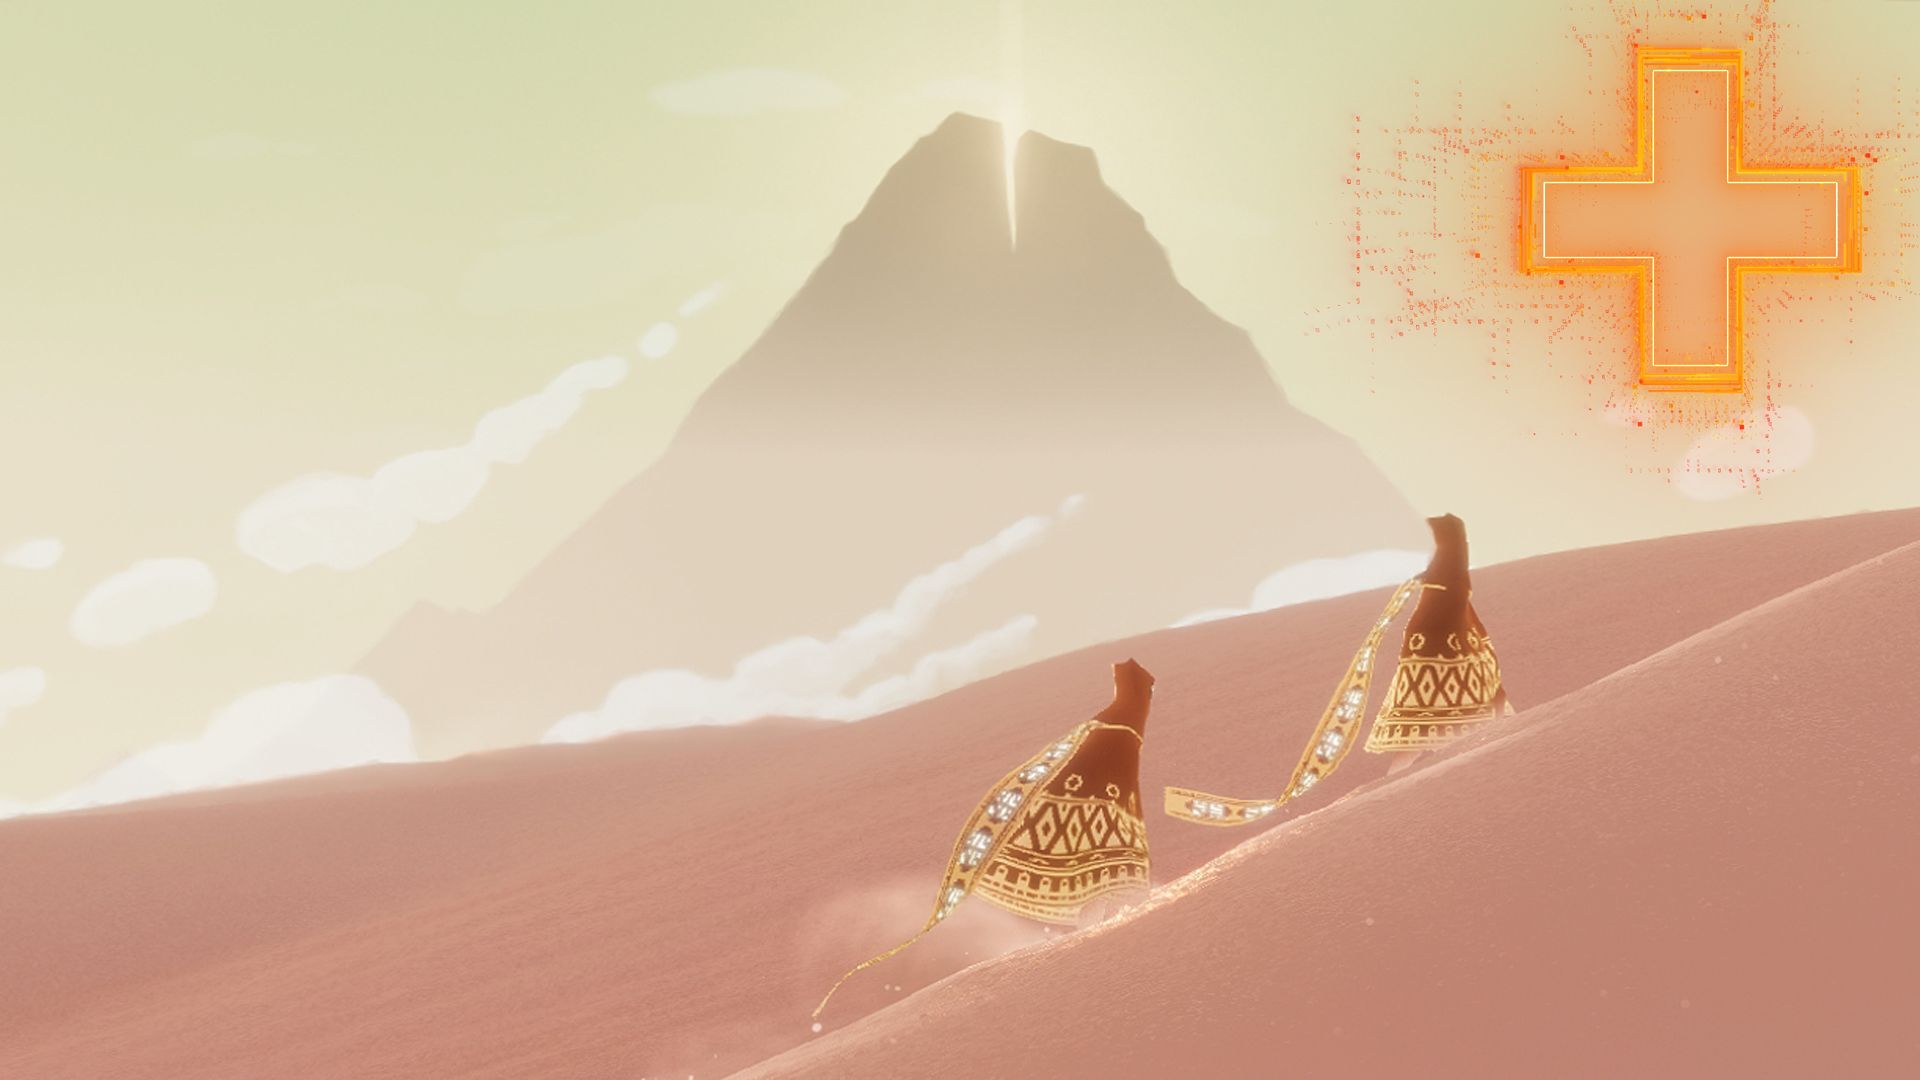 Celestyal journey. Journey игра. Journey (игра, 2012). Journey пустыня ps4 Скриншоты thatgamecompany. Джорни путешествие игра.